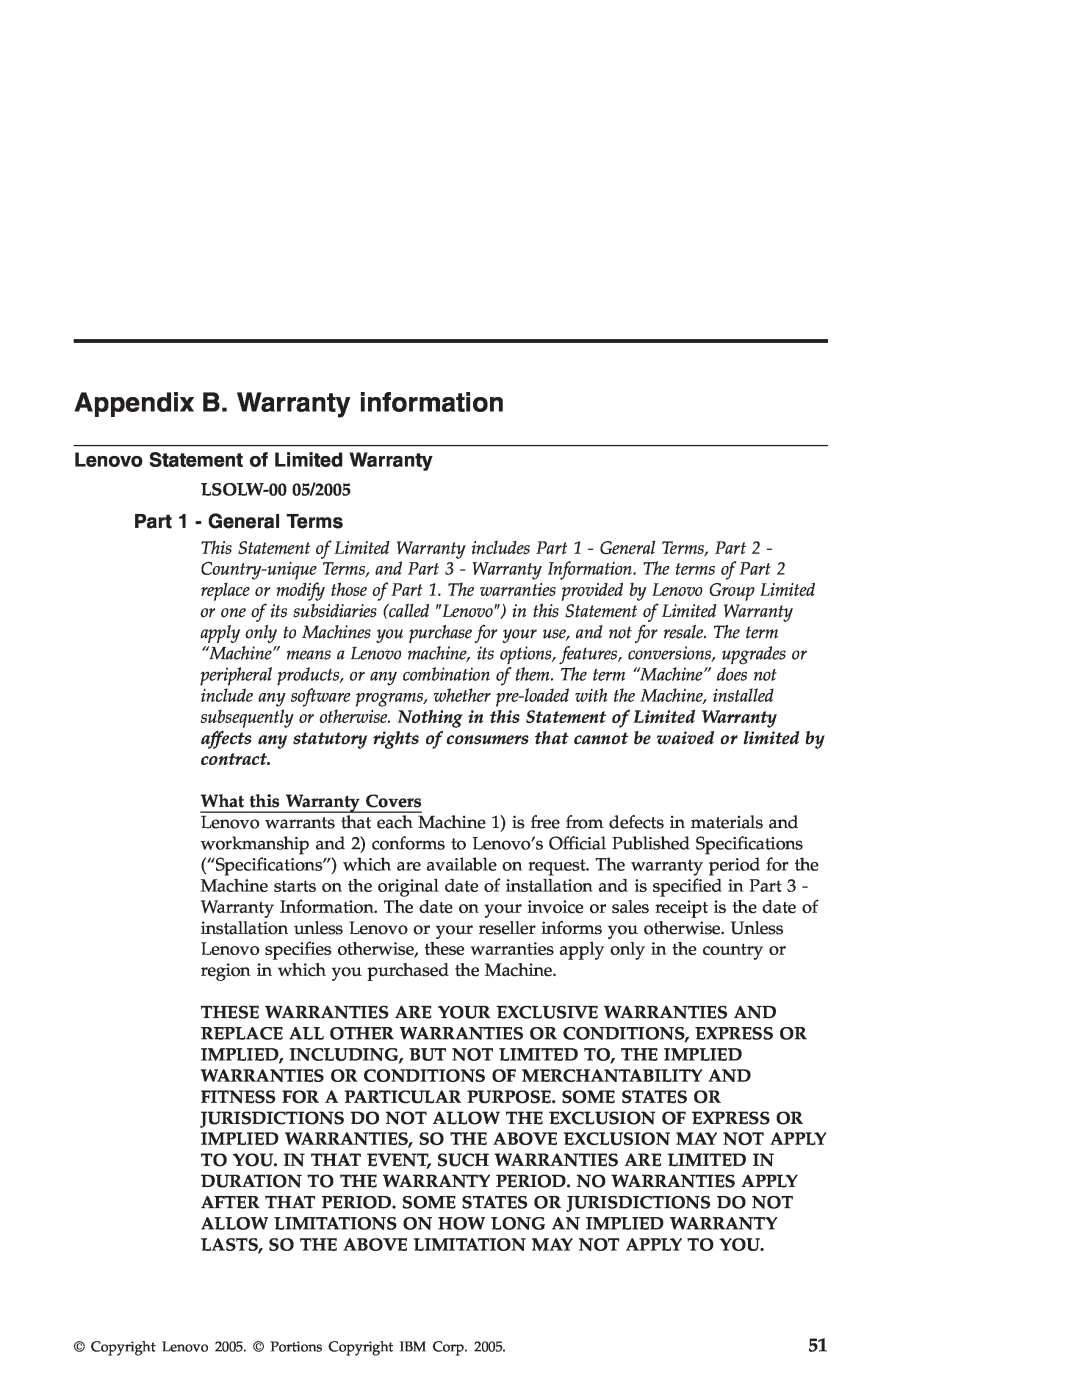 Lenovo T40 Appendix B. Warranty information, Lenovo Statement of Limited Warranty, Part 1 - General Terms, LSOLW-0005/2005 